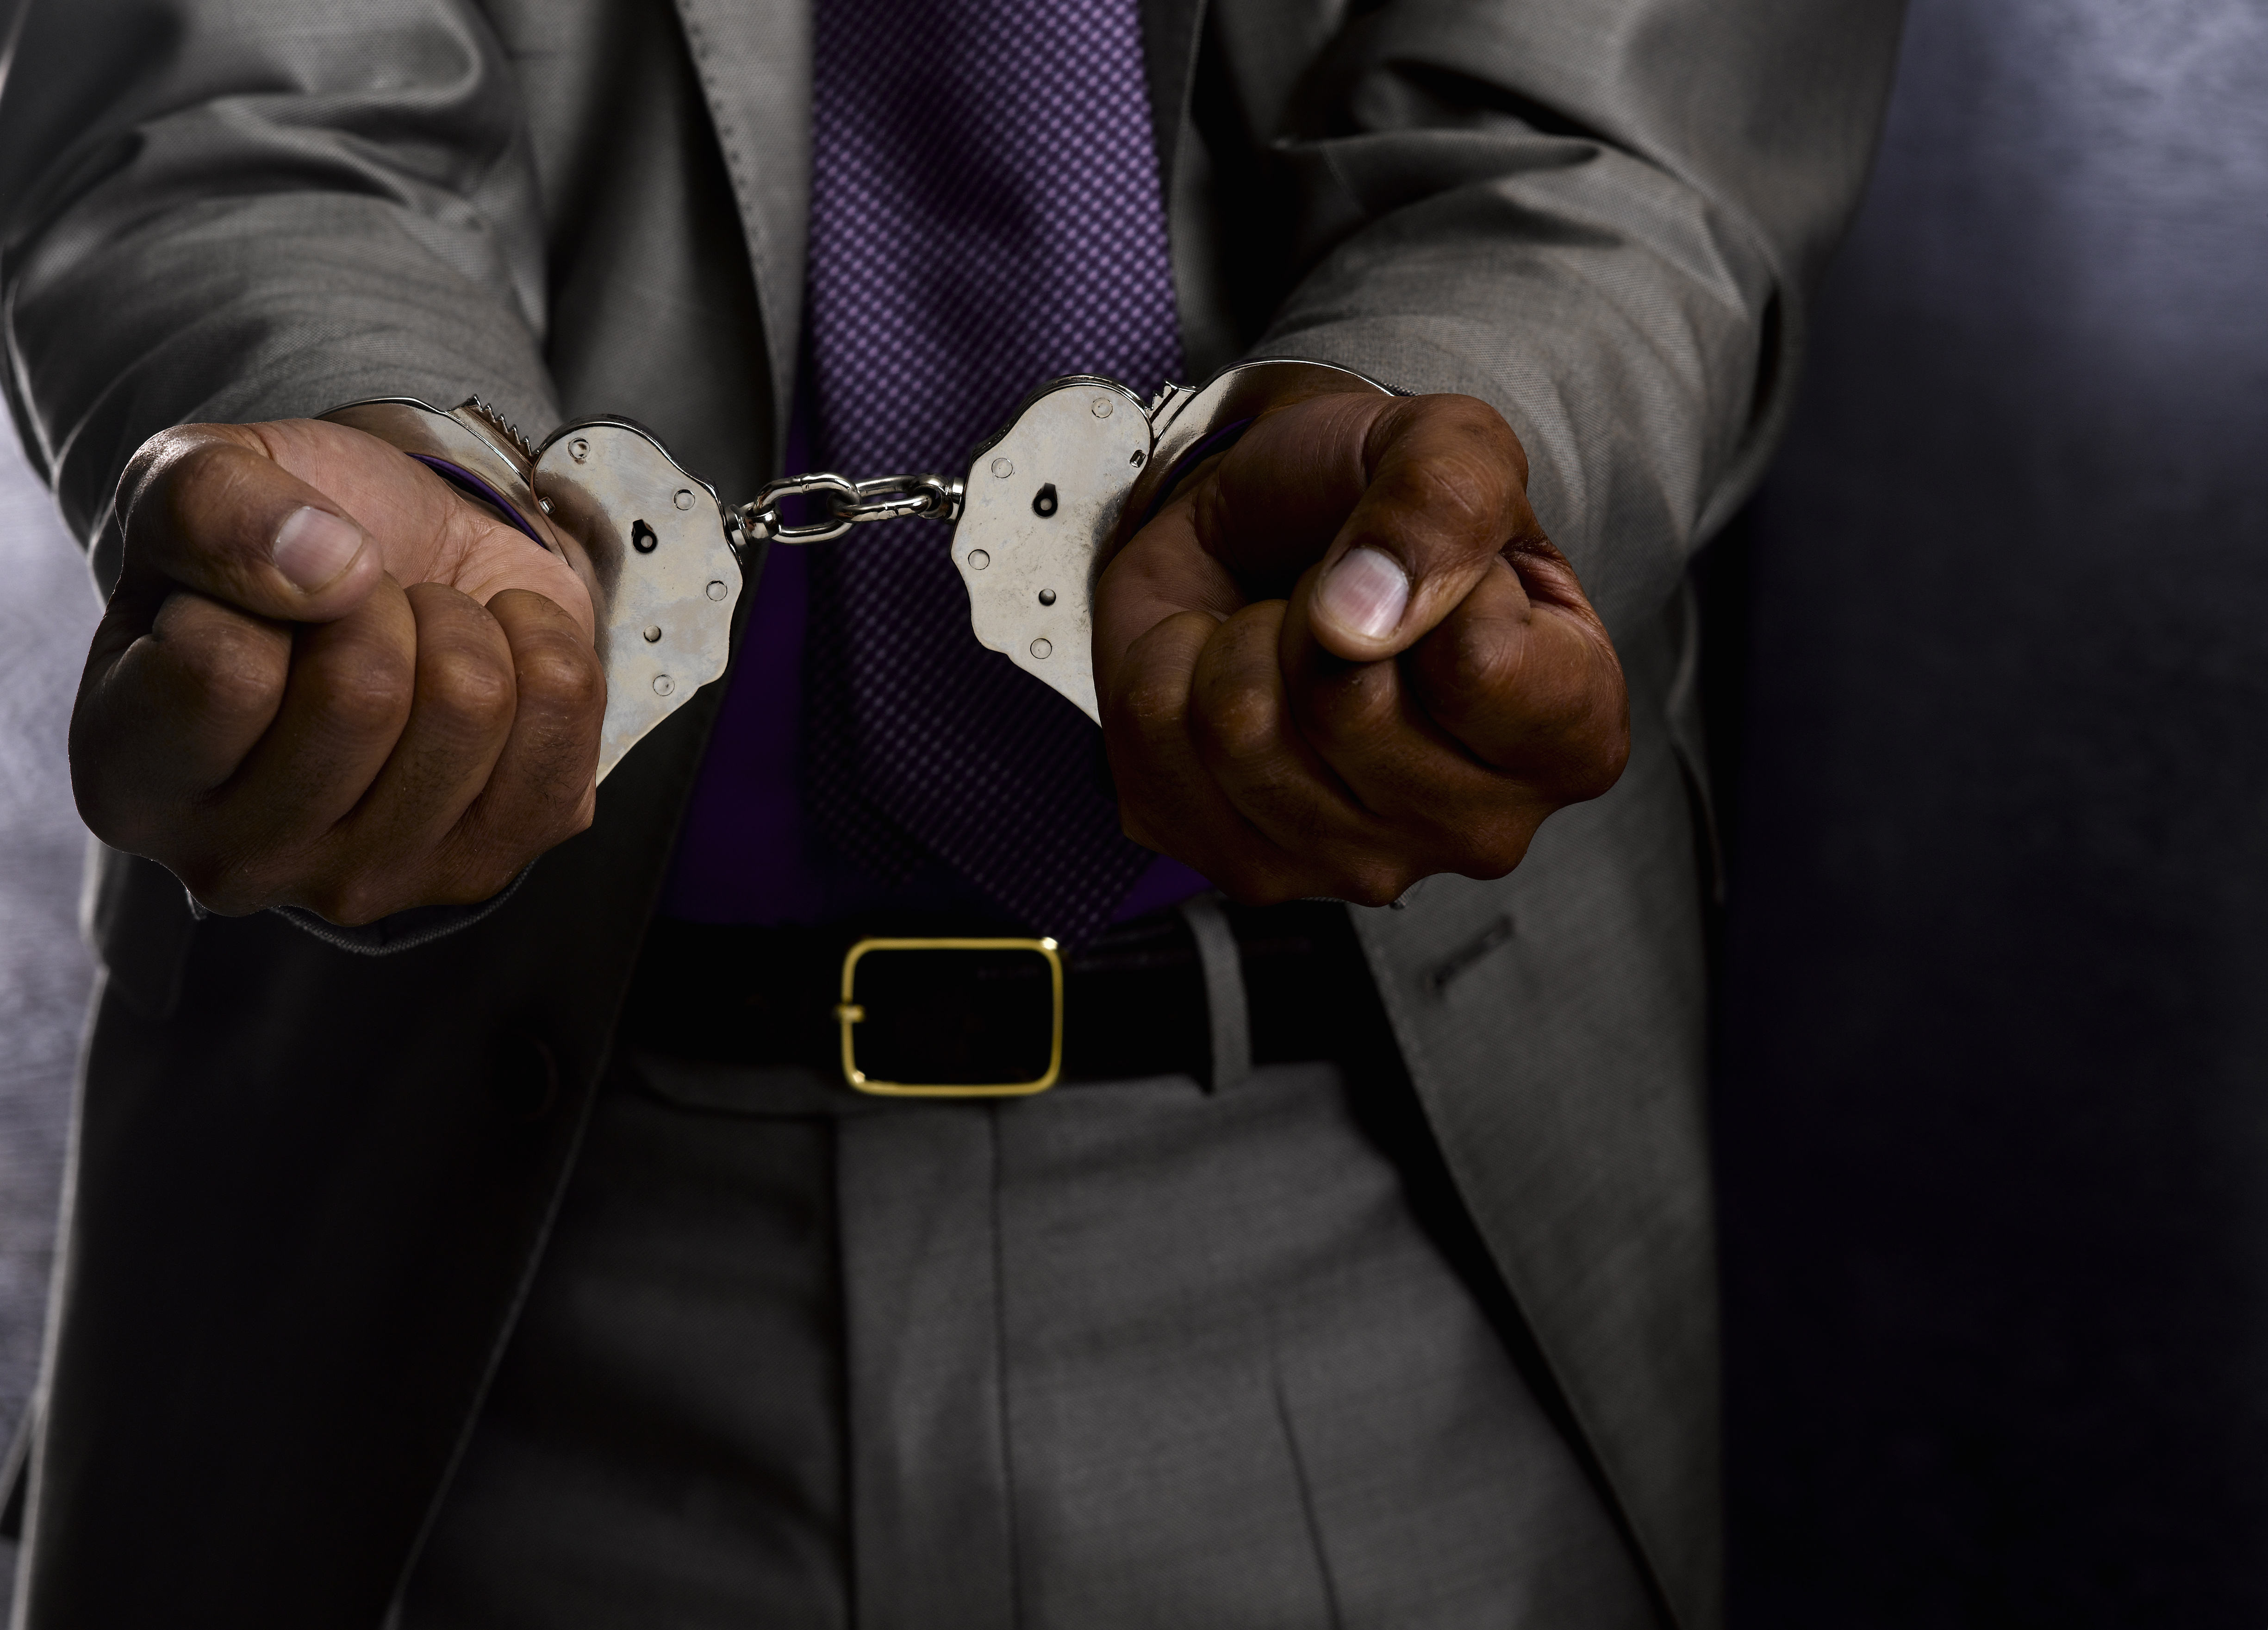 Business man in handcuffs